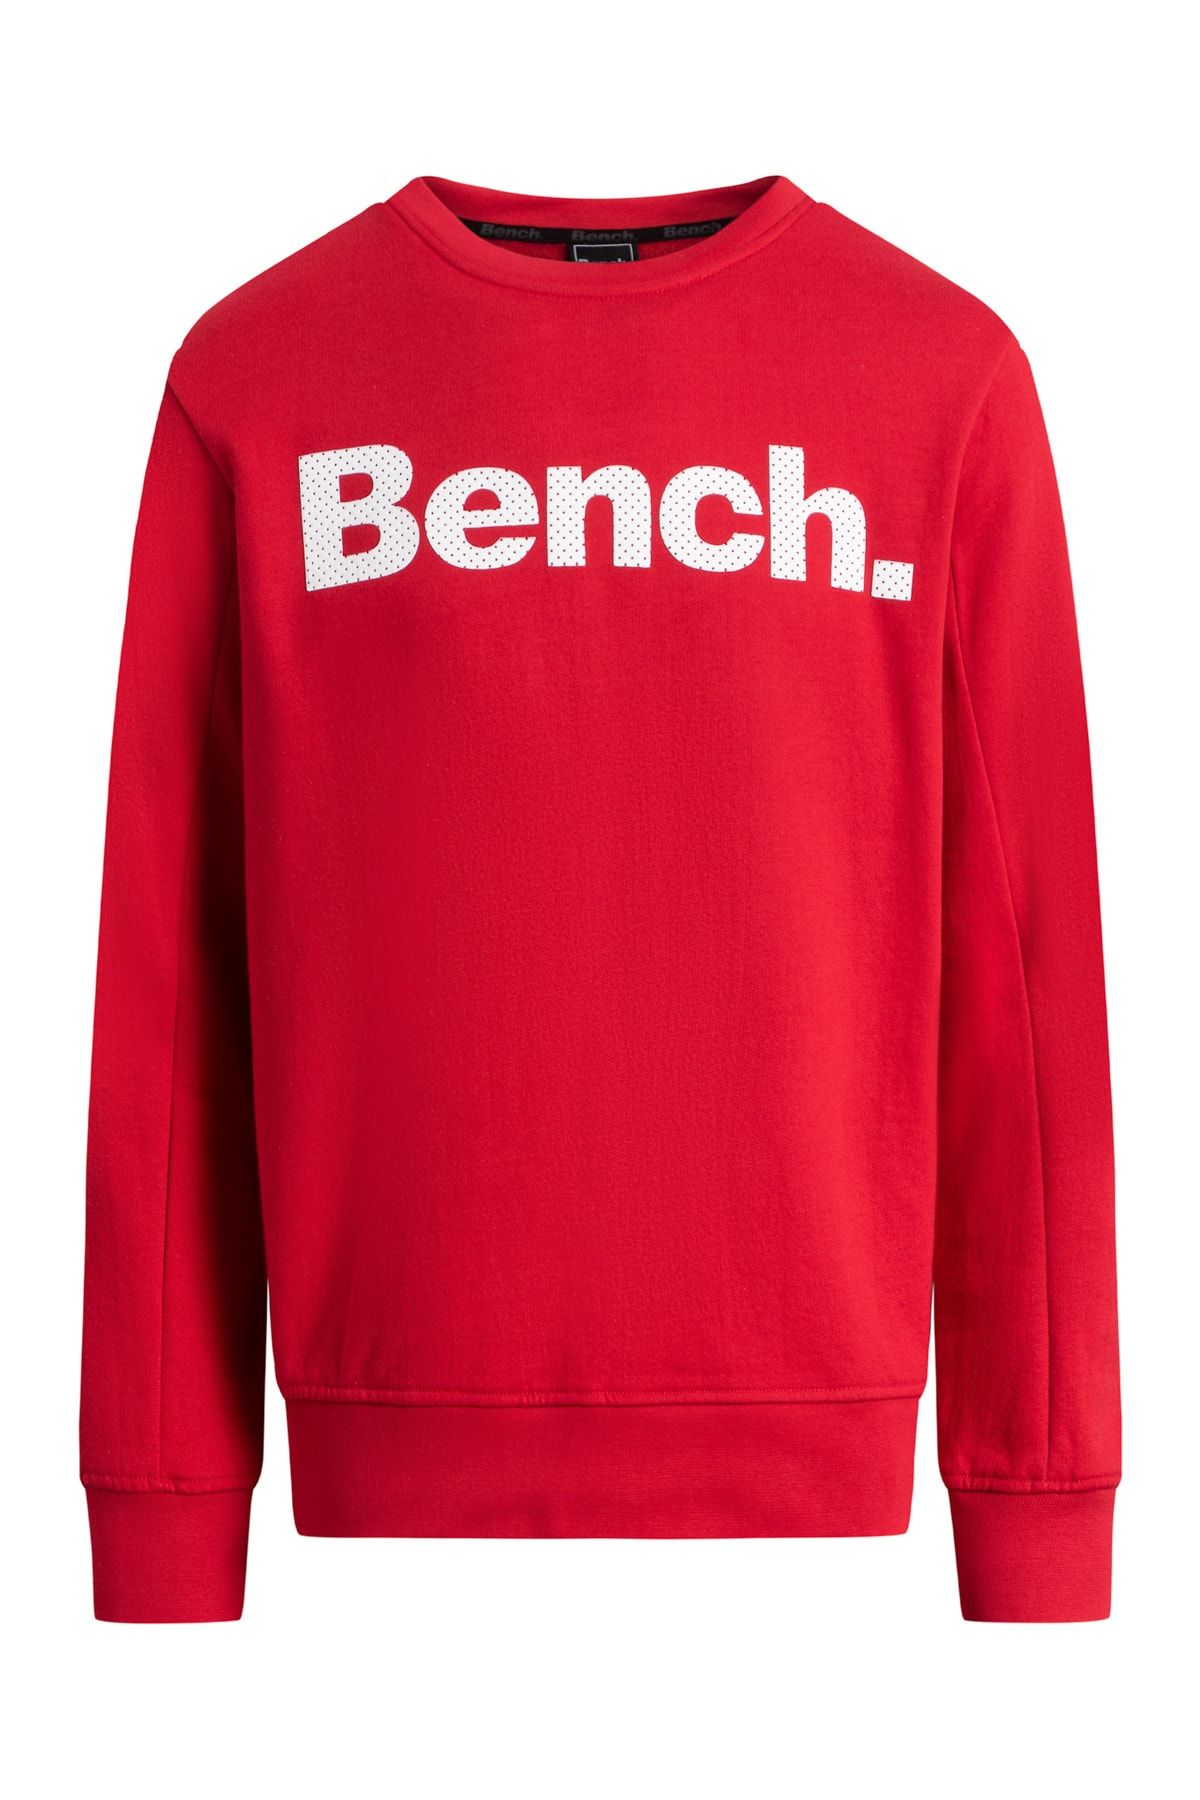 BENCH Sweatshirt - Red - Trendyol Regular - fit